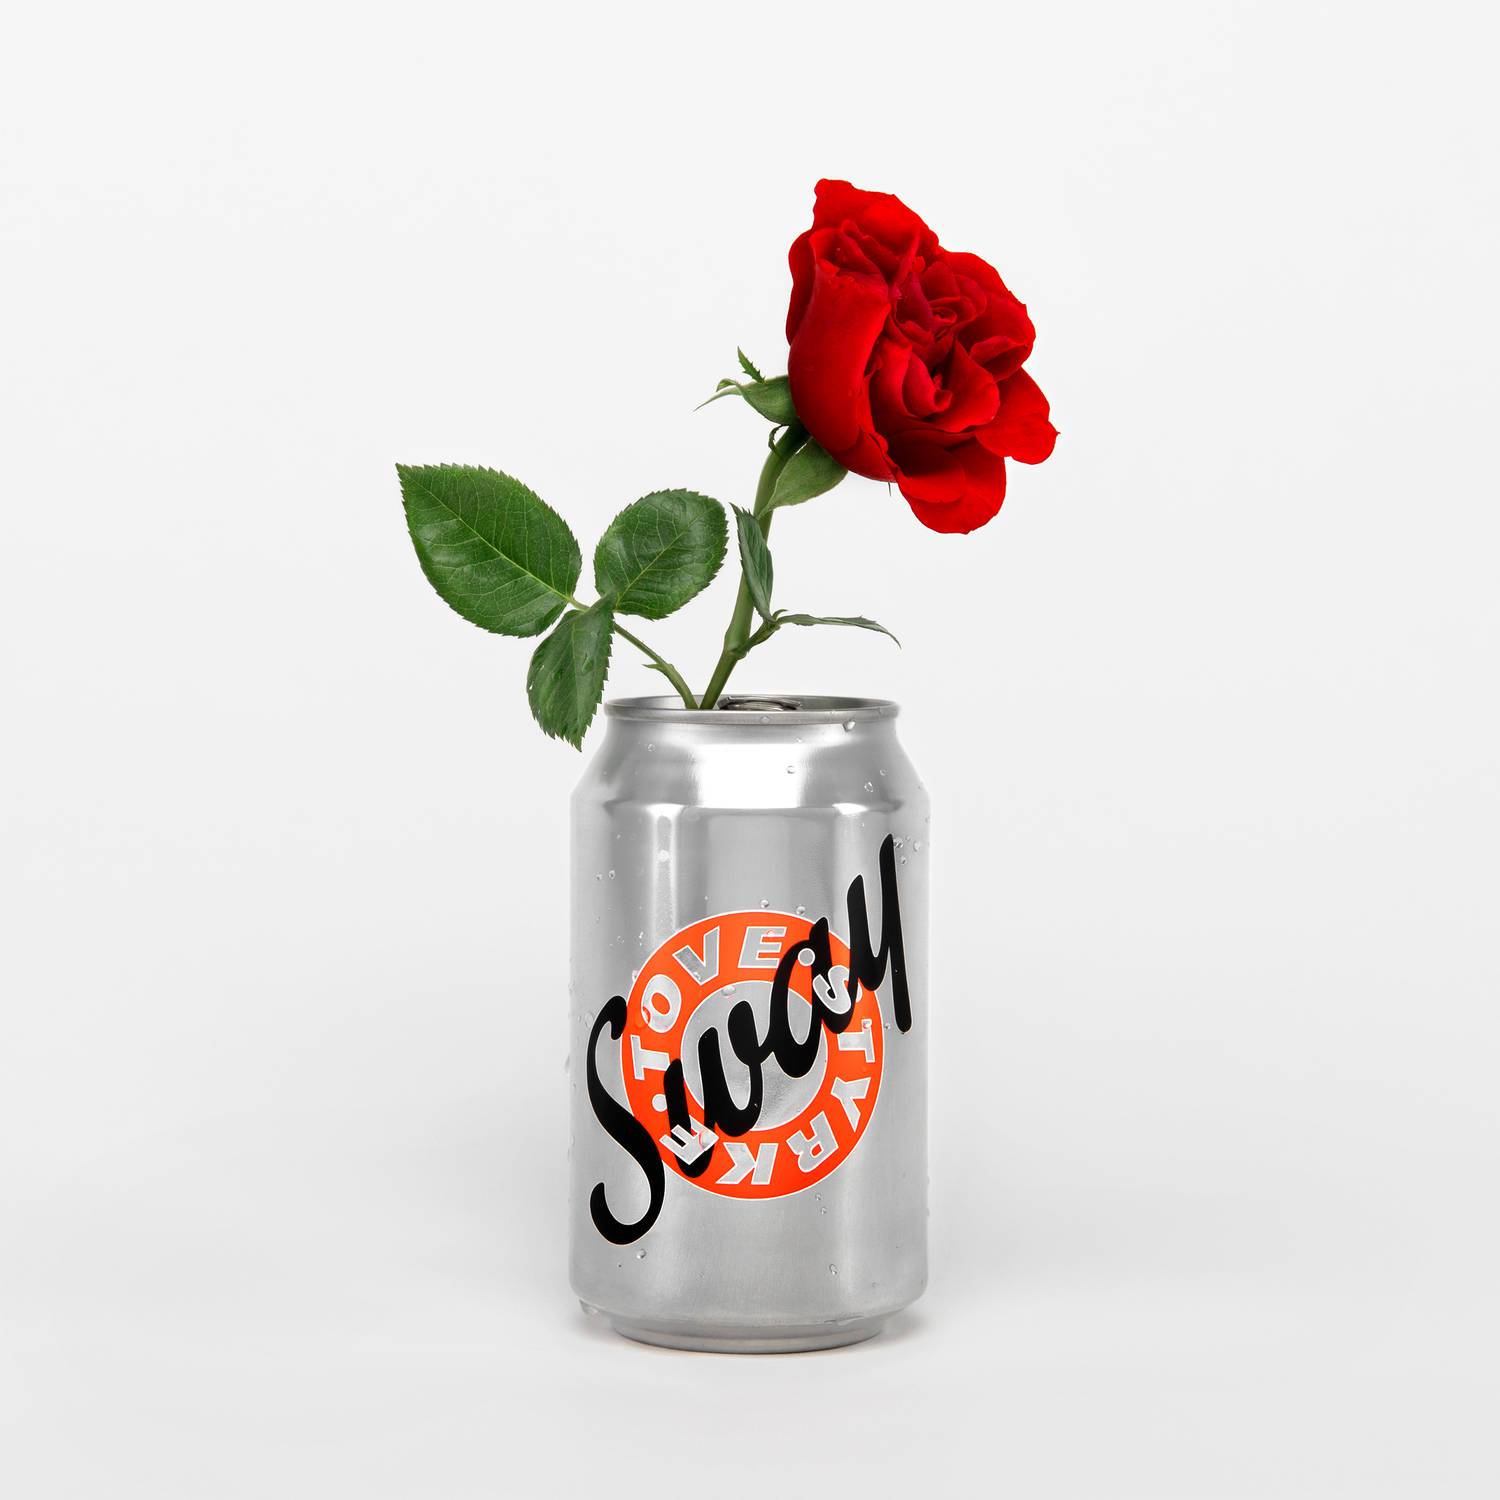 Sway歌词 歌手Tove Styrke-专辑Sway-单曲《Sway》LRC歌词下载